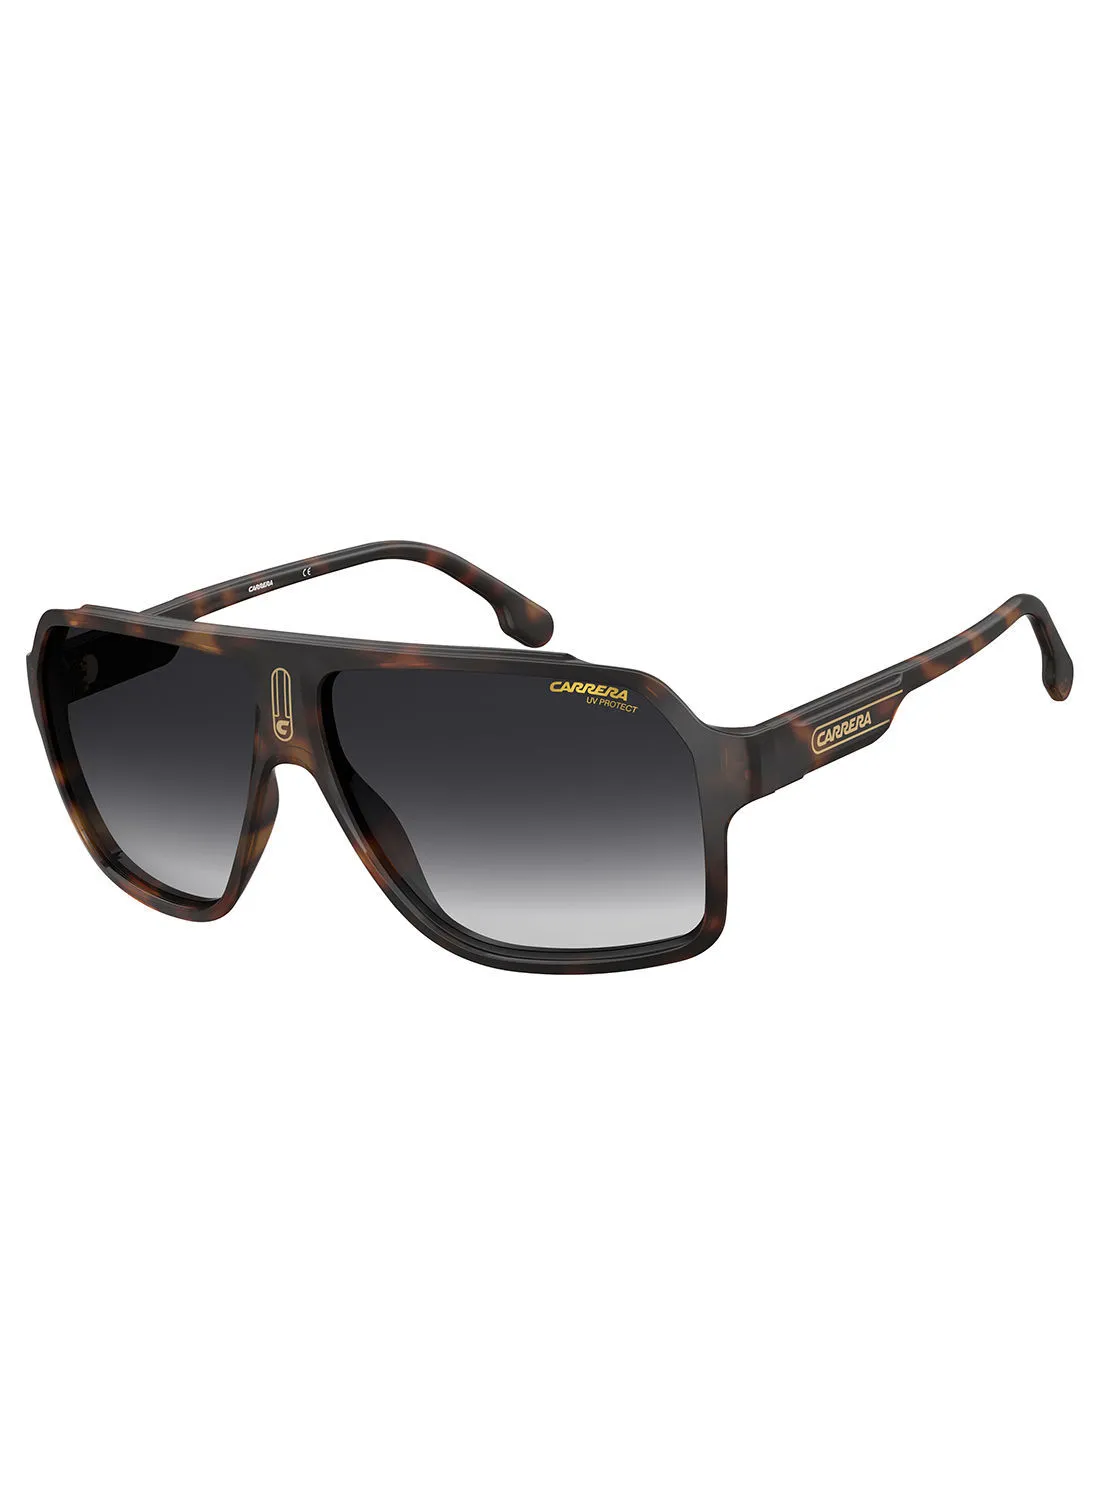 CARRERA UV Protection Rectangular Eyewear Sunglasses CARRERA 1030/S  HVN 62